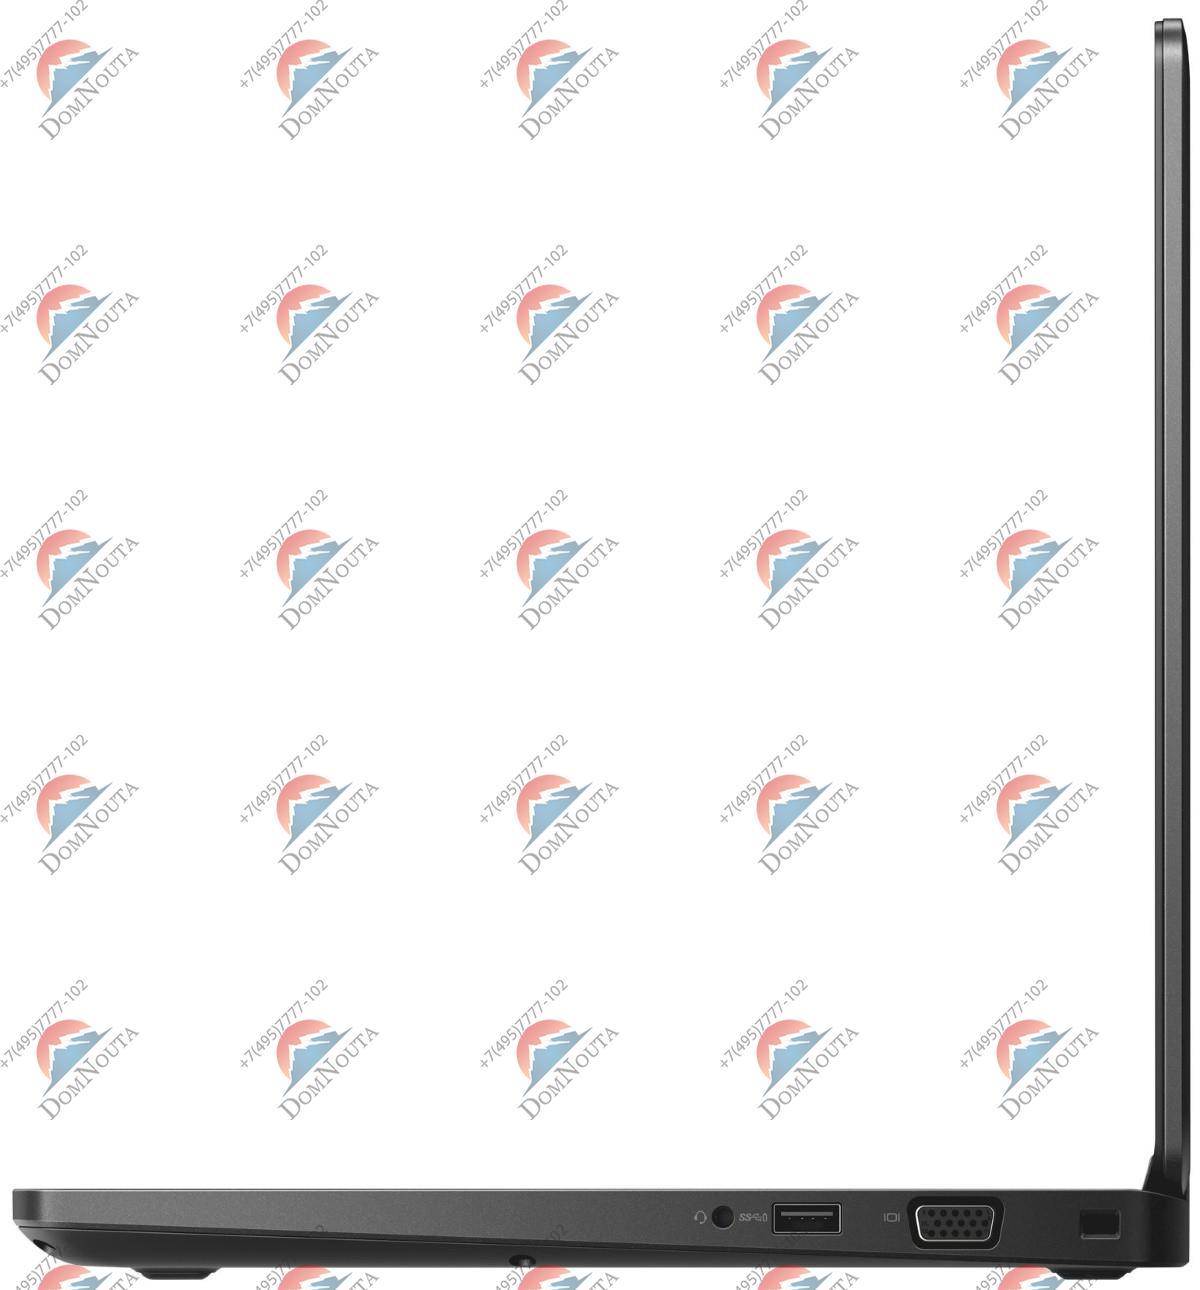 Ноутбук Dell Inspiron 5480